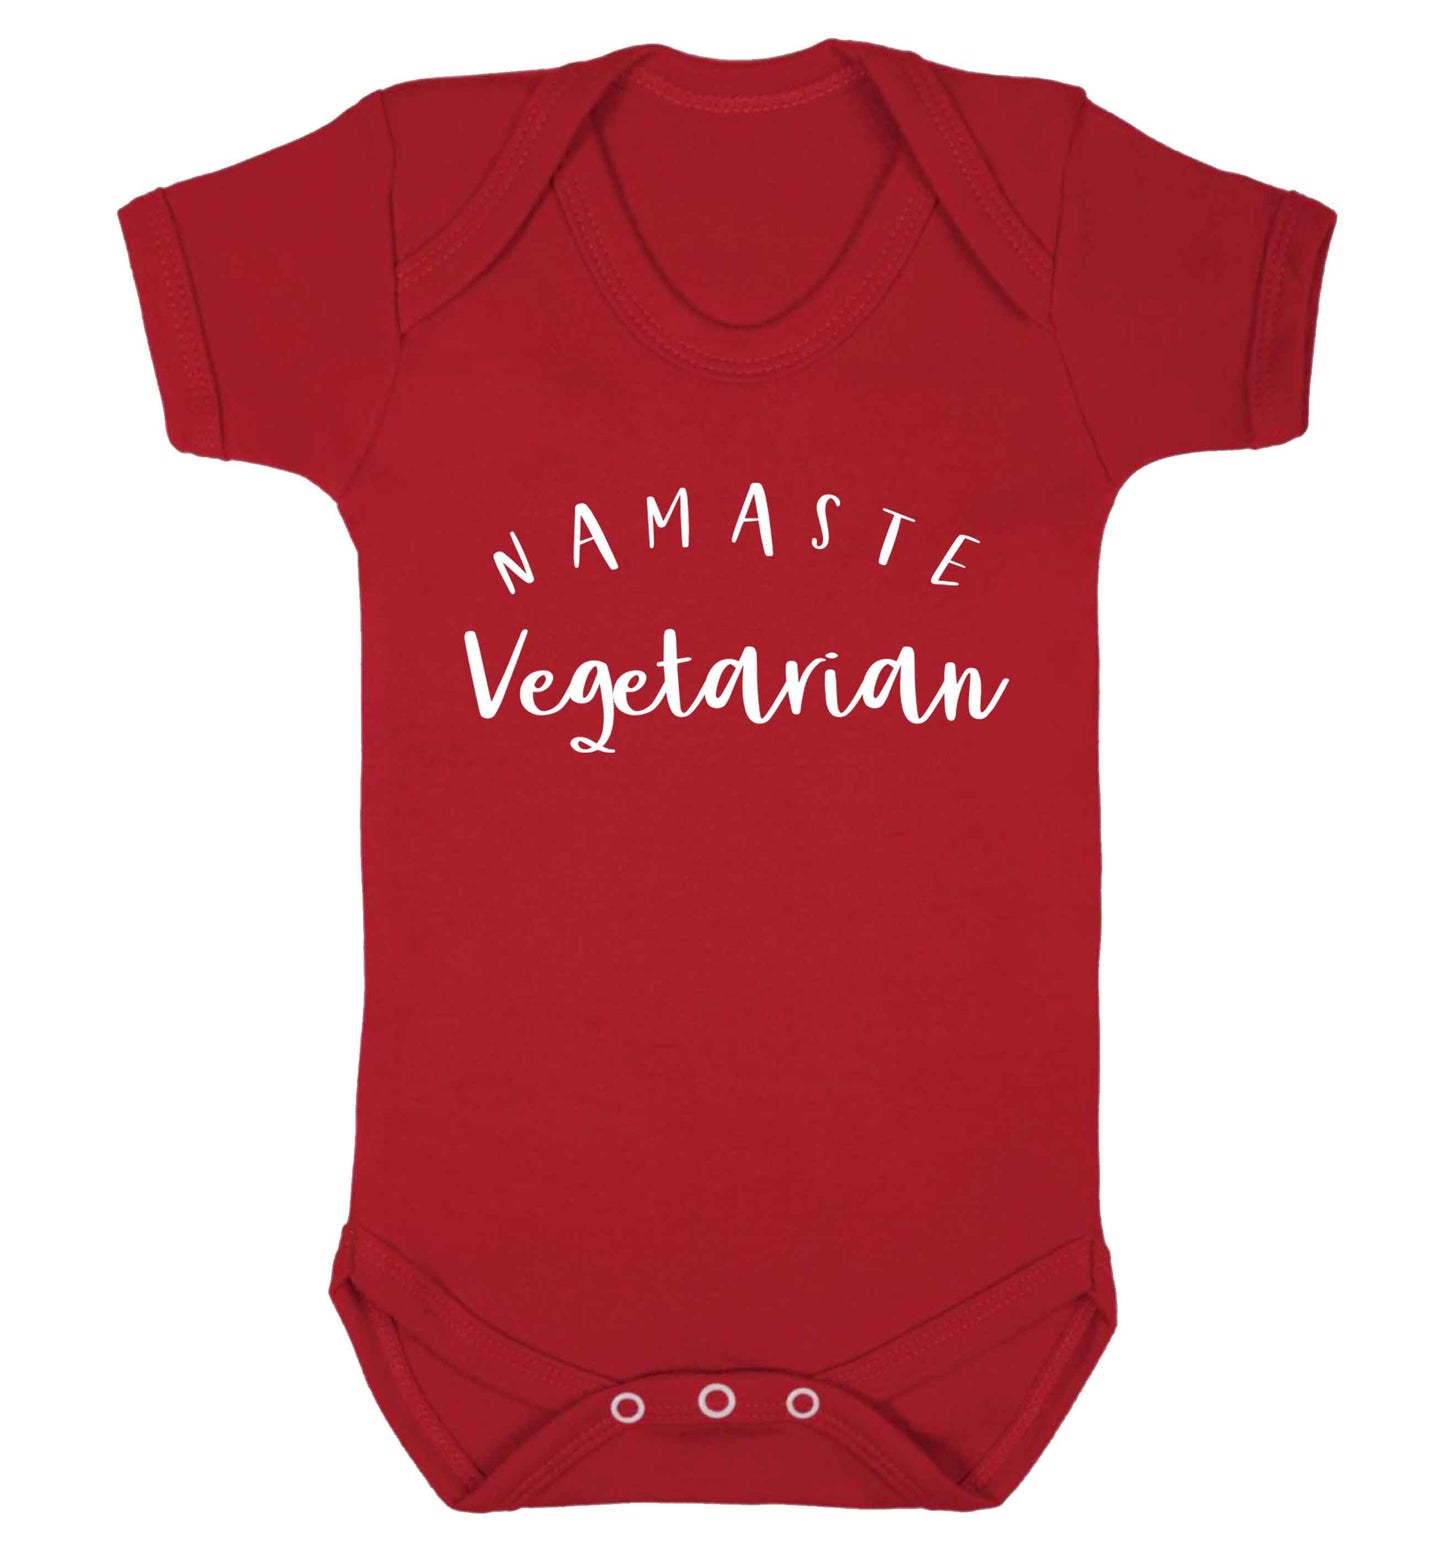 Namaste vegetarian Baby Vest red 18-24 months